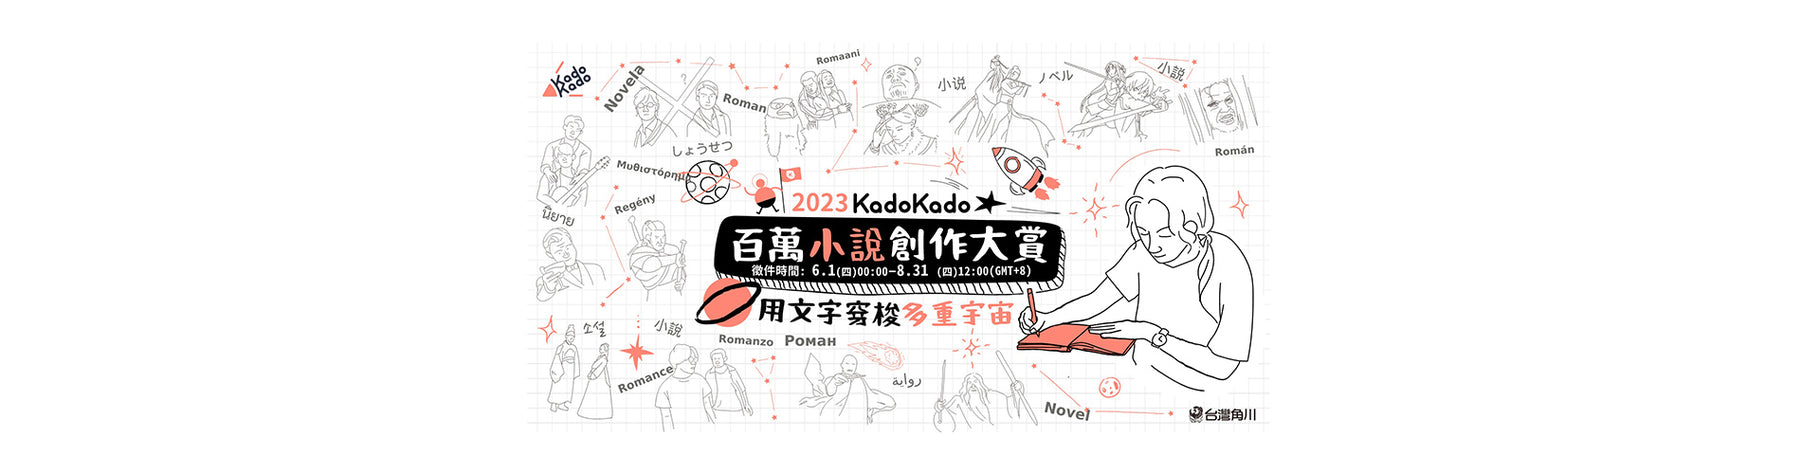 2023 KadoKado 百萬小說創作大賞 6月1日開放徵件！  最高首獎獎金與跨域多重獎項 打造華文IP創作最高殿堂！